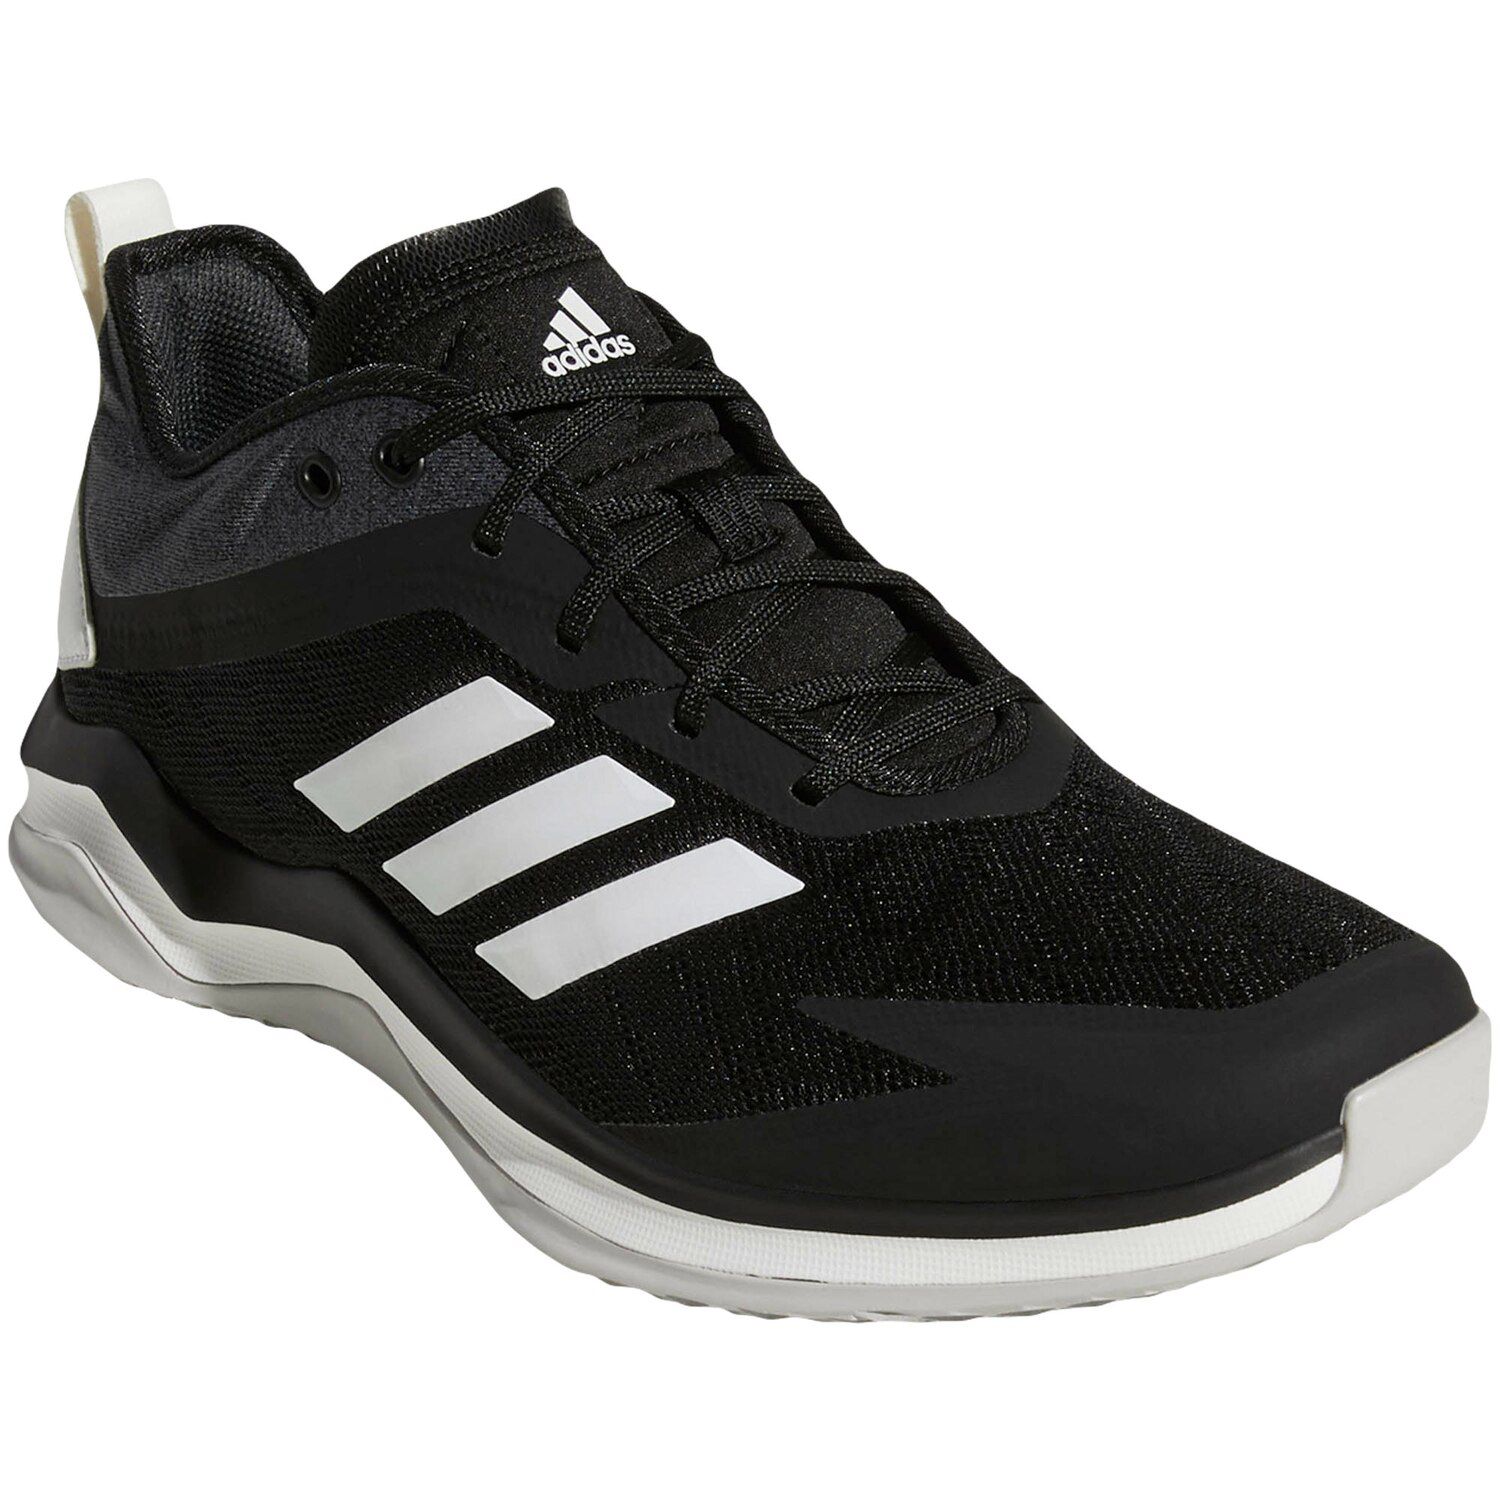 Men's adidas Black Speed Trainer 4 Shoes